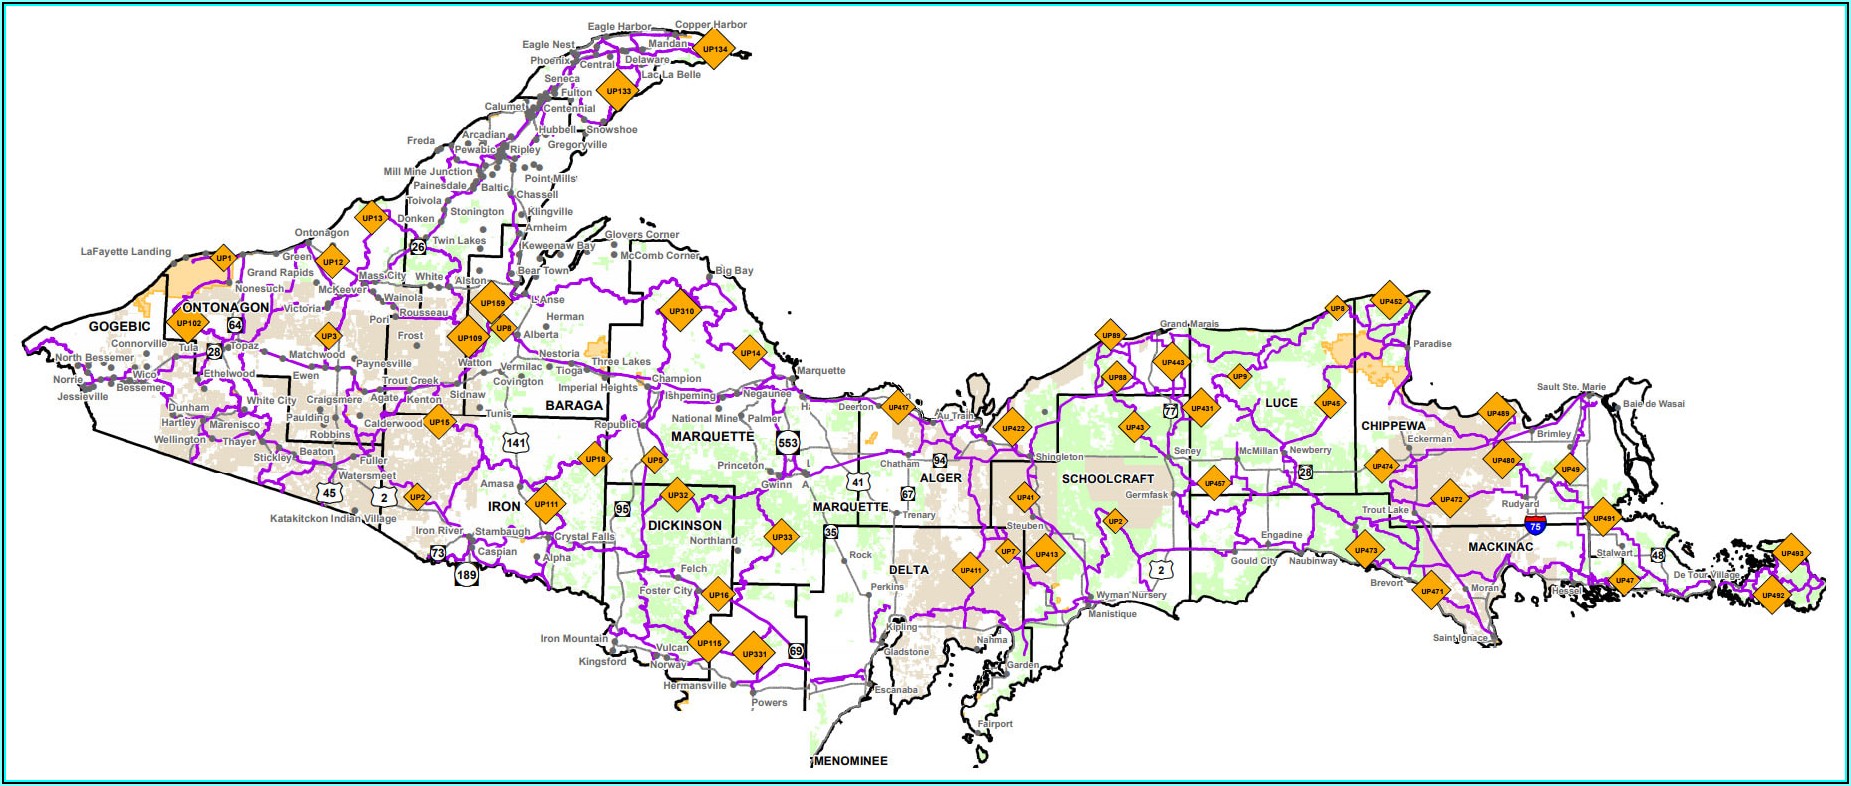 Snowmobile Gps Trail Maps Michigan - map : Resume Examples #7NYAZ3gVpv